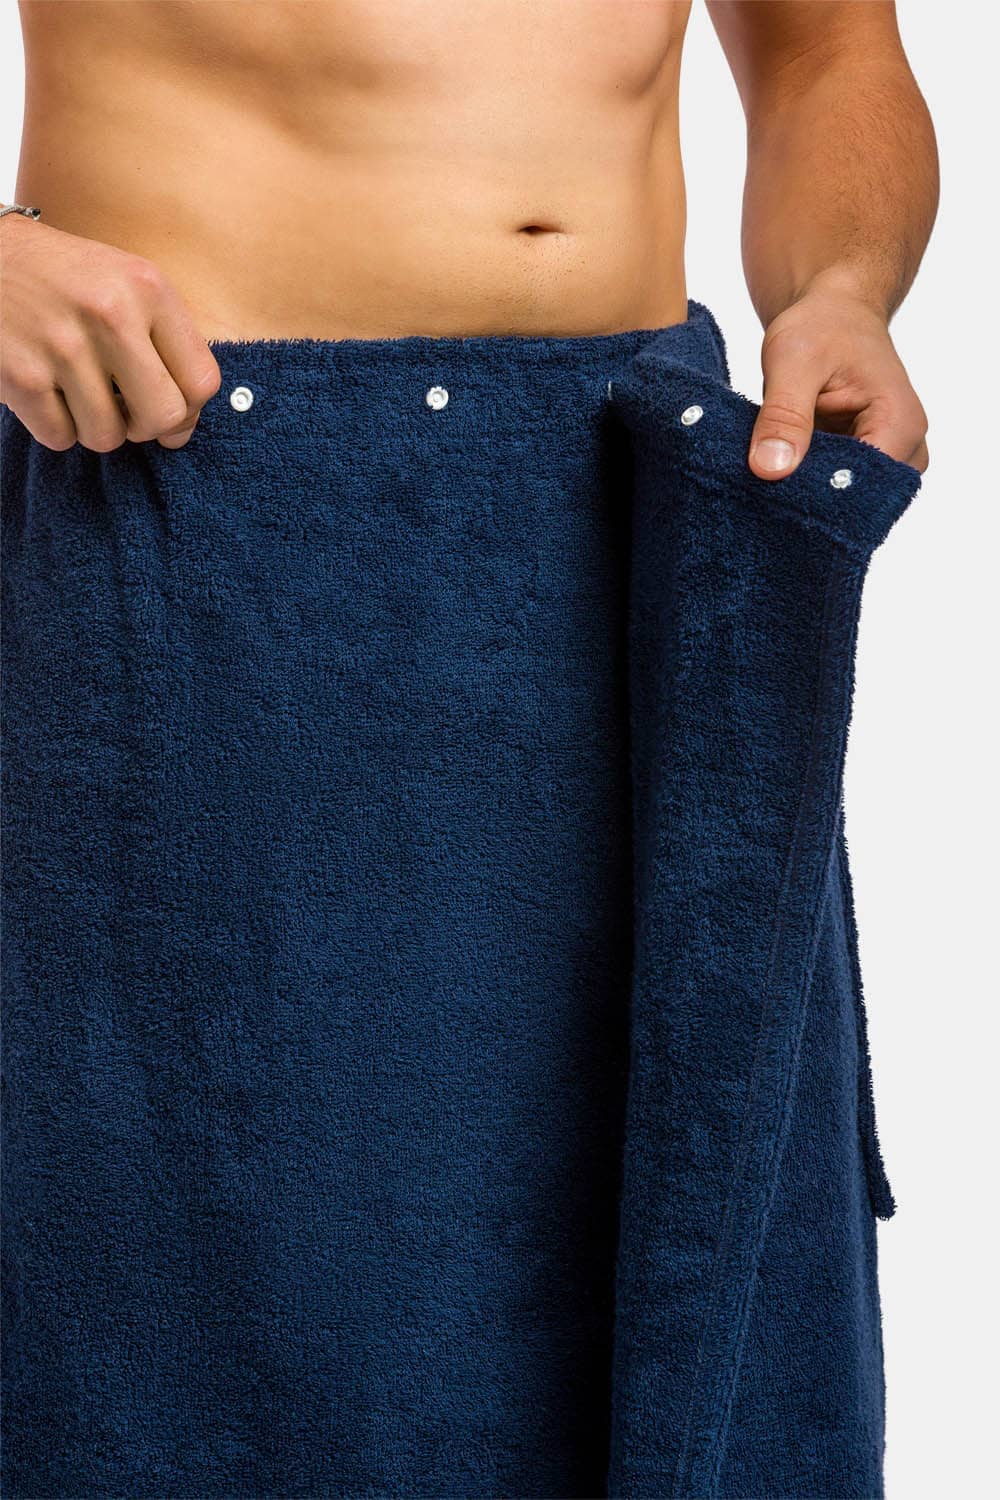 Men's Resort Style Terry Cloth Body Wrap Mens>Sleepwear>Wrap Fishers Finery 